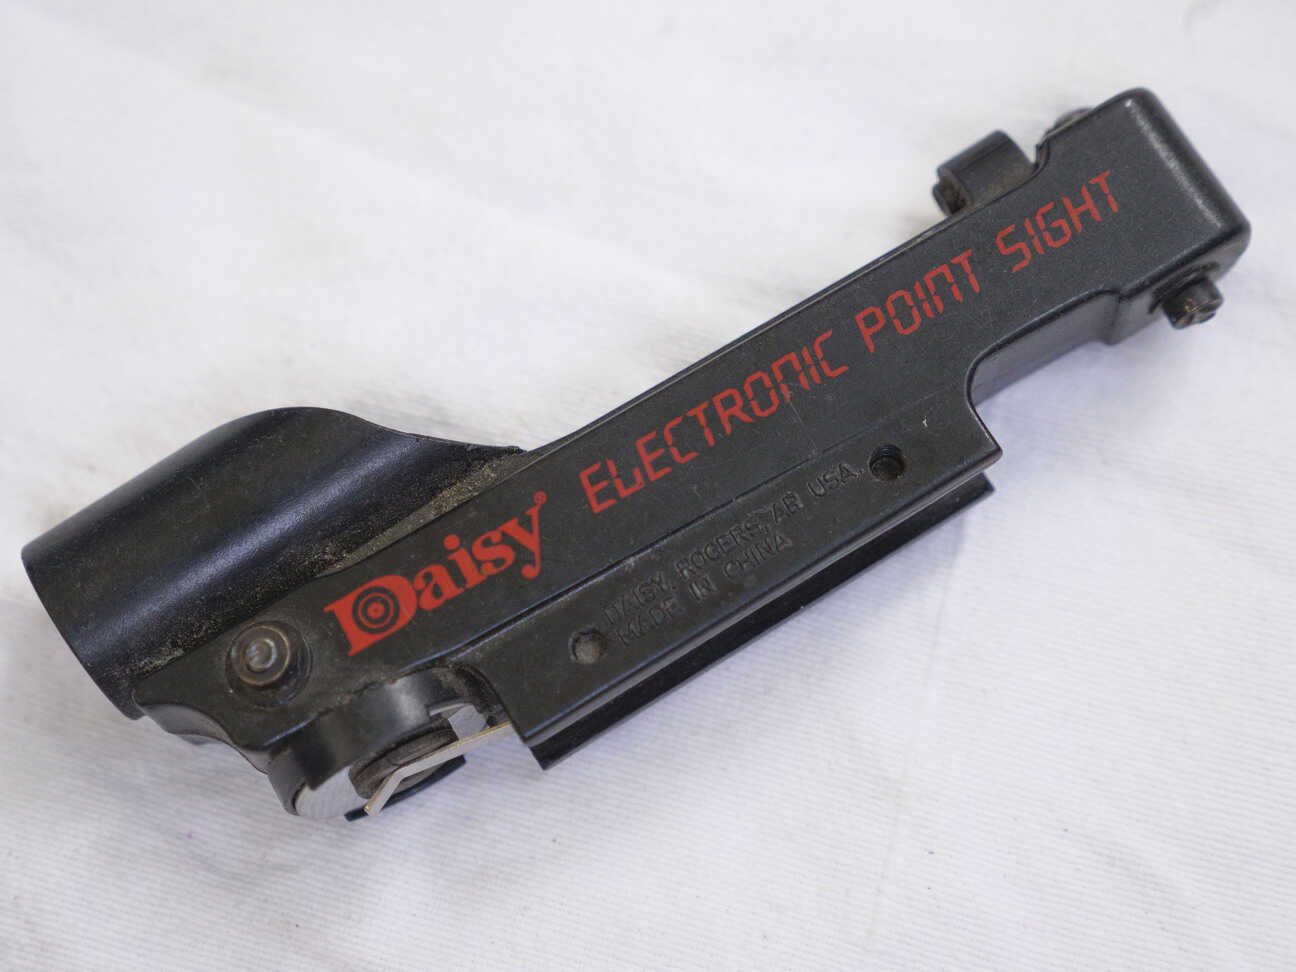 Daisy Electronic Point Sight, good shape, untested